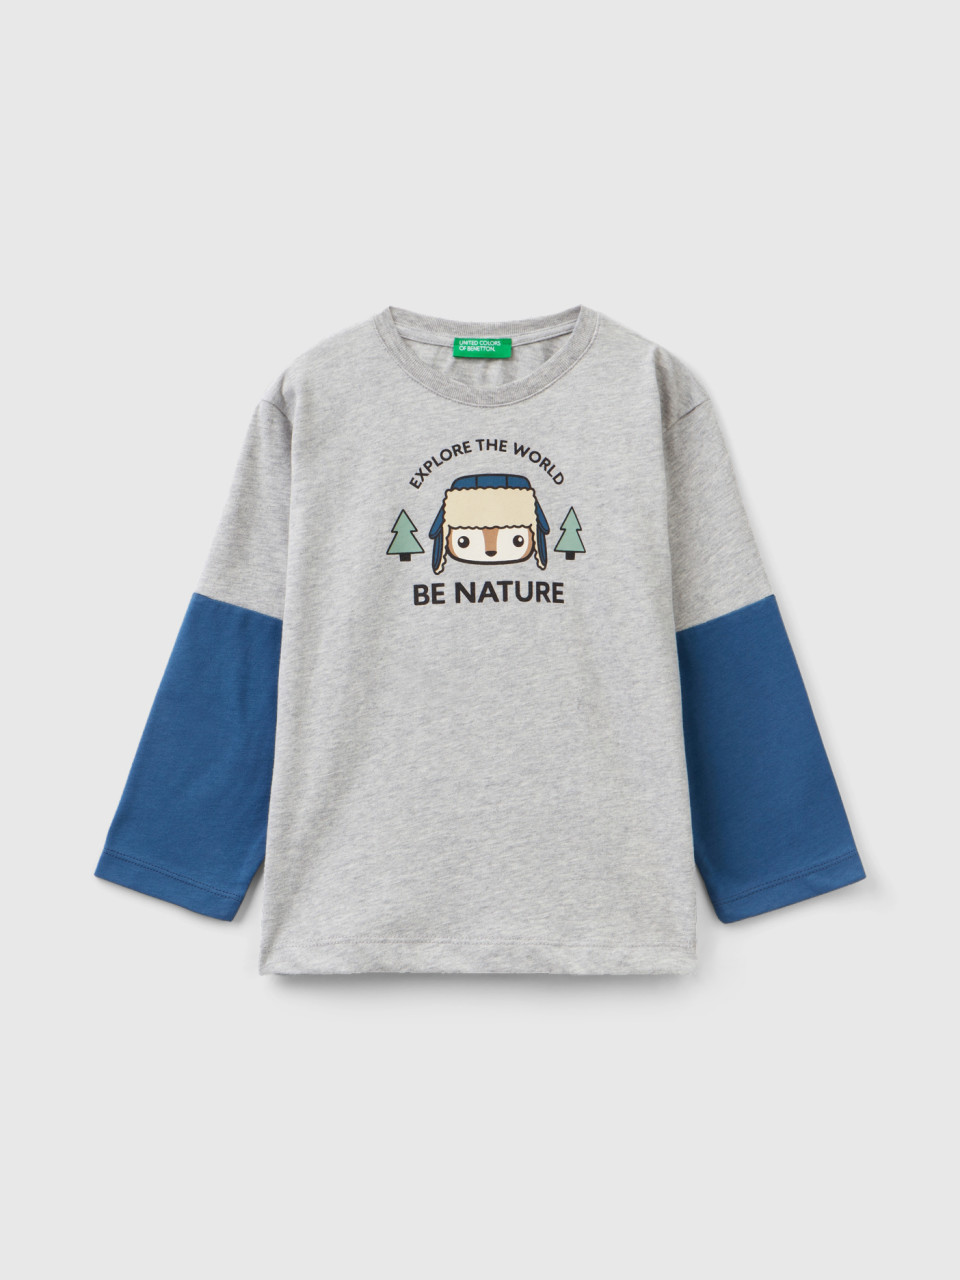 Benetton, Warm T-shirt With Print, Light Gray, Kids